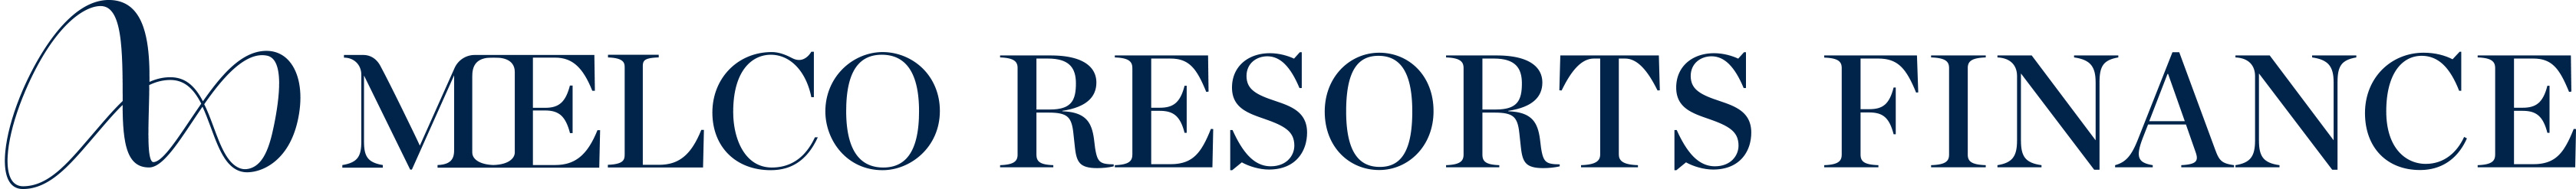 1904-Melco Resorts Finance-logo copy.jpg